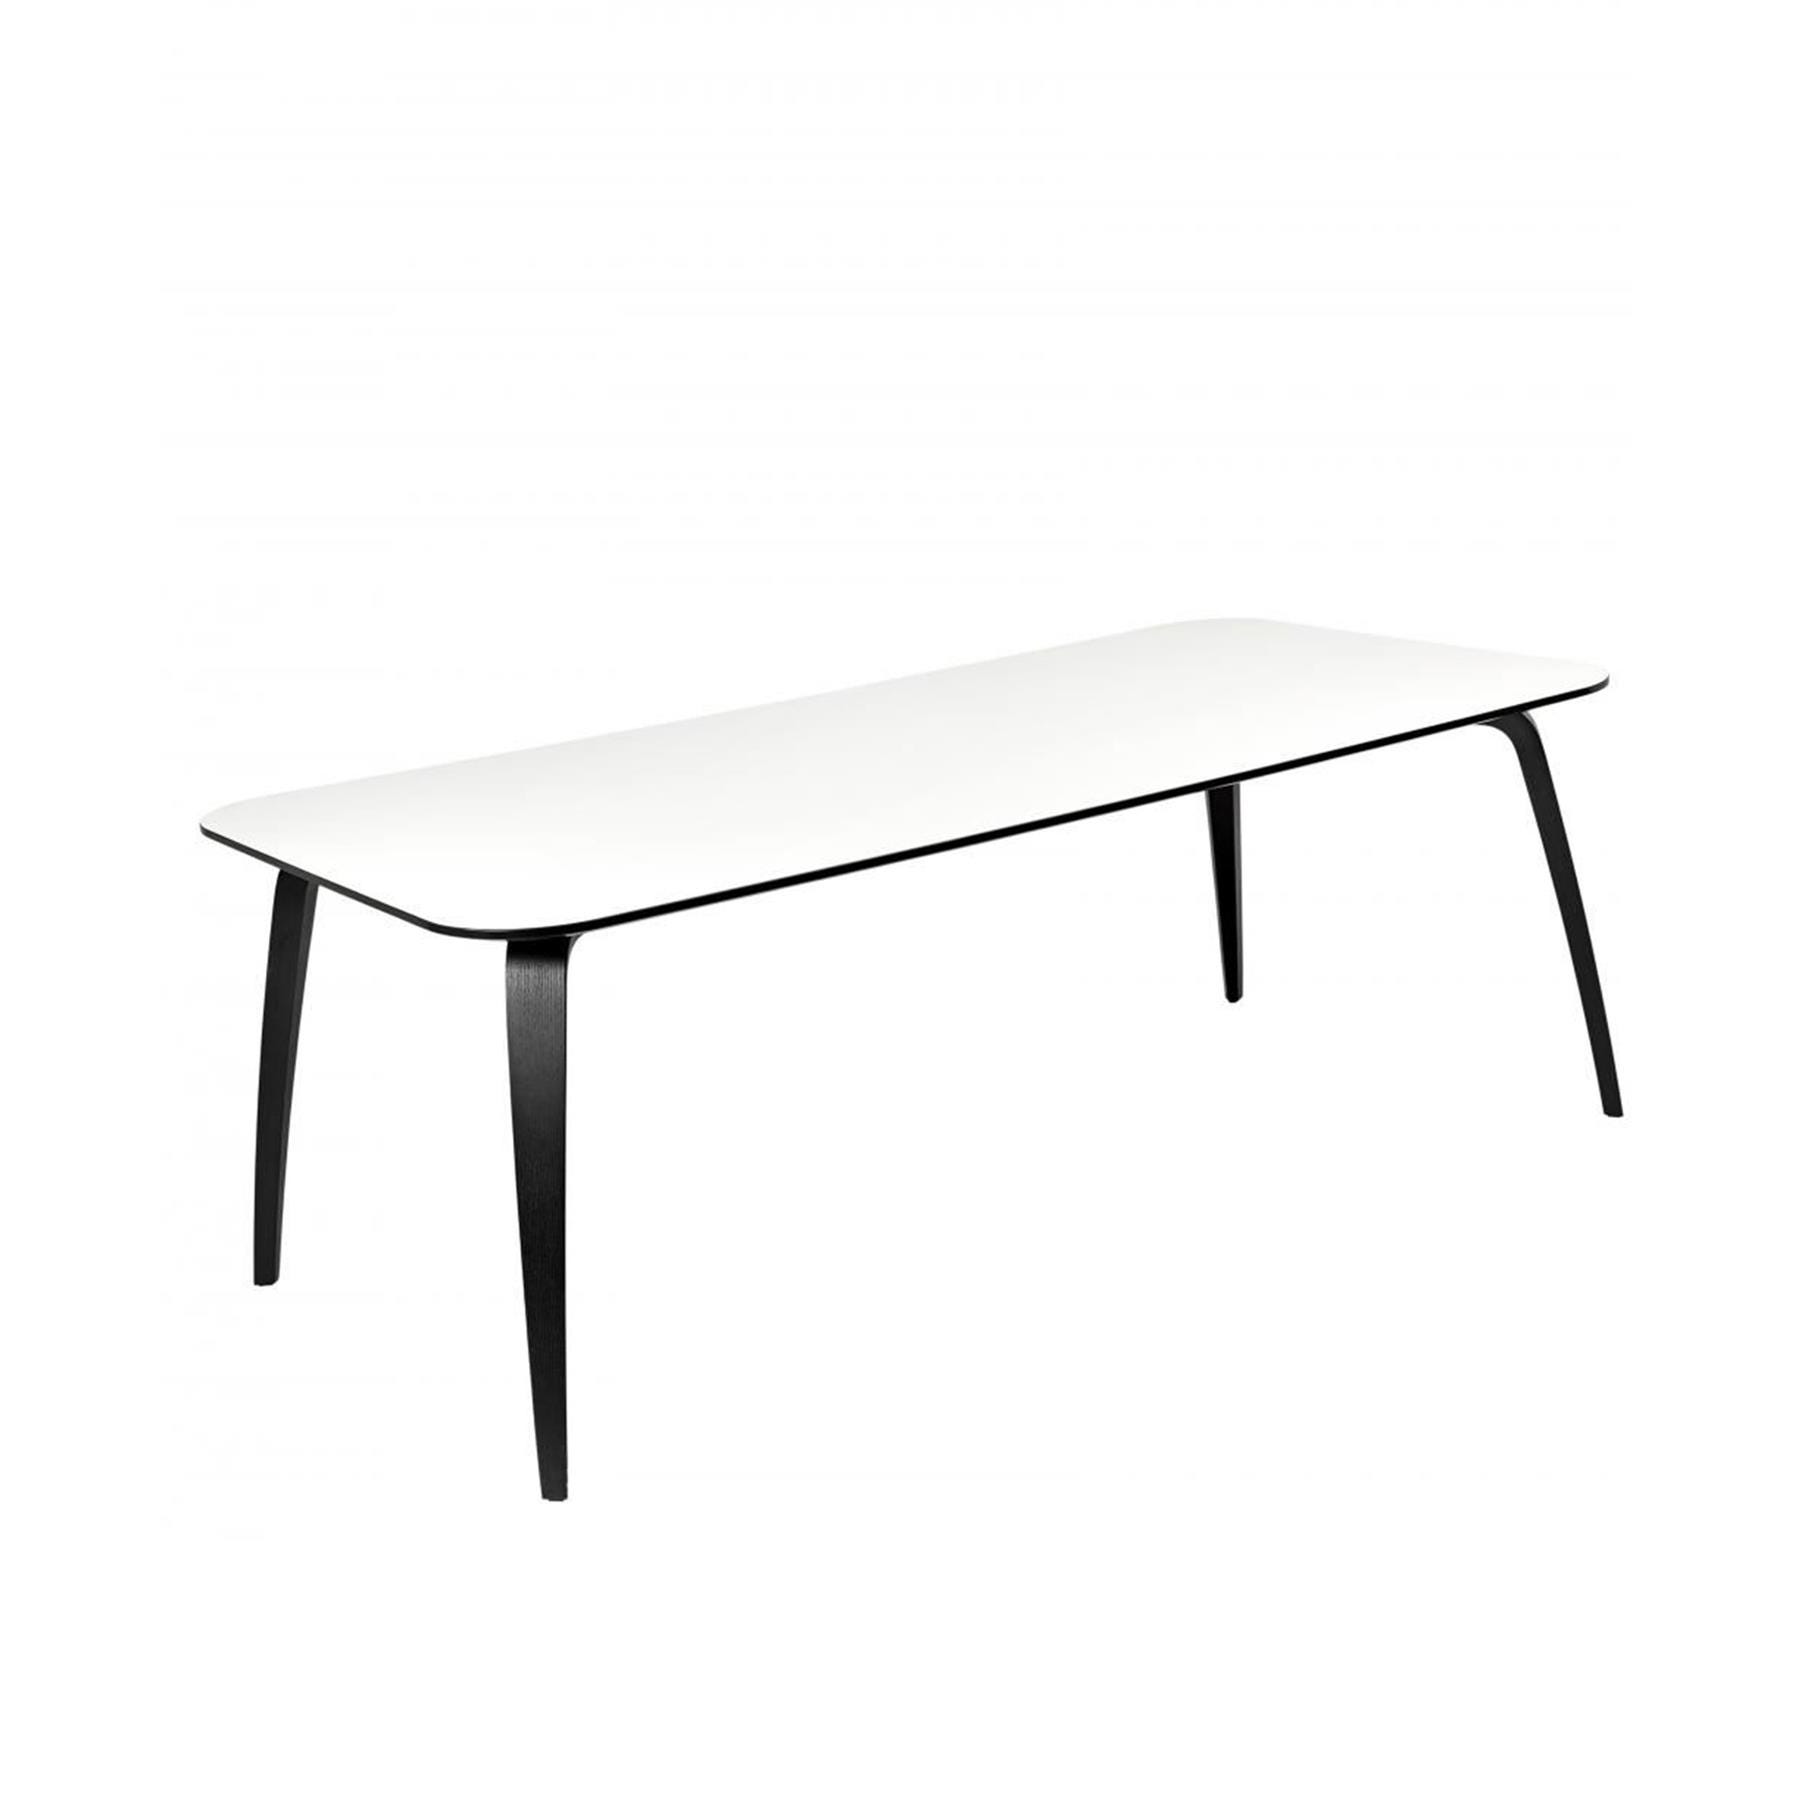 Gubi Dining Table Rectangular Laminate White With Black Edges And Legs